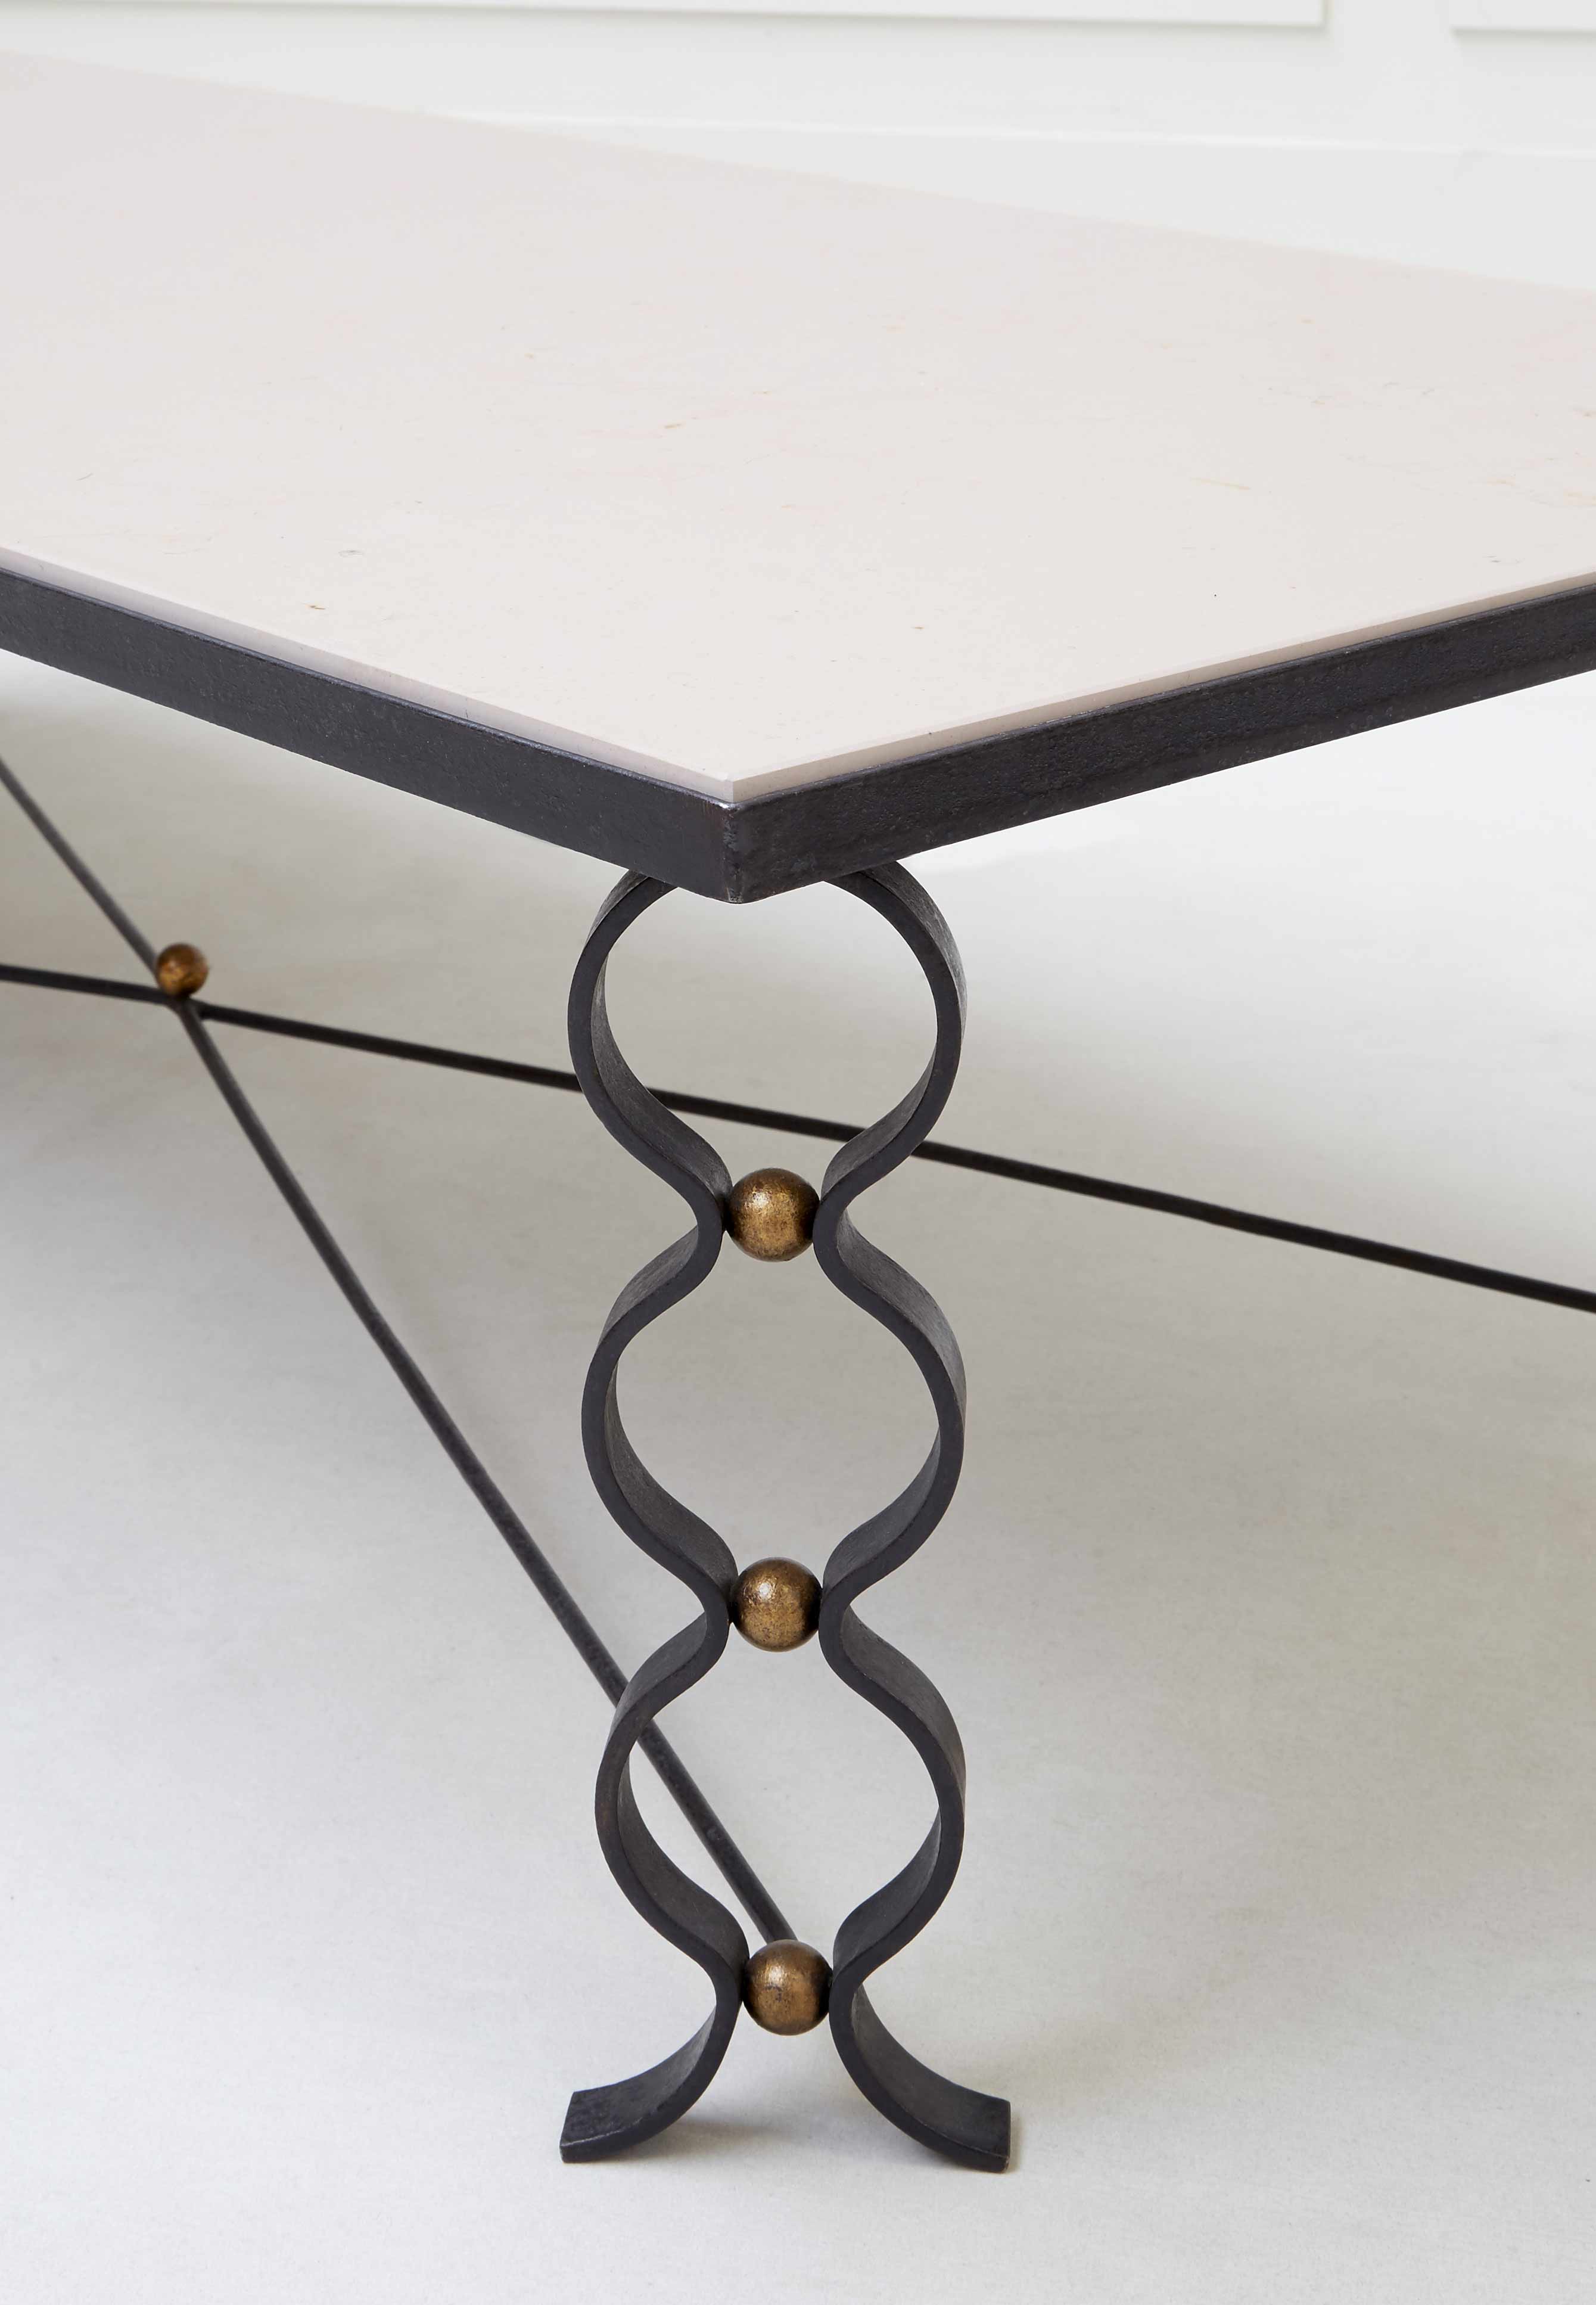 Jean Royère, “Ruban” coffee table, vue 02